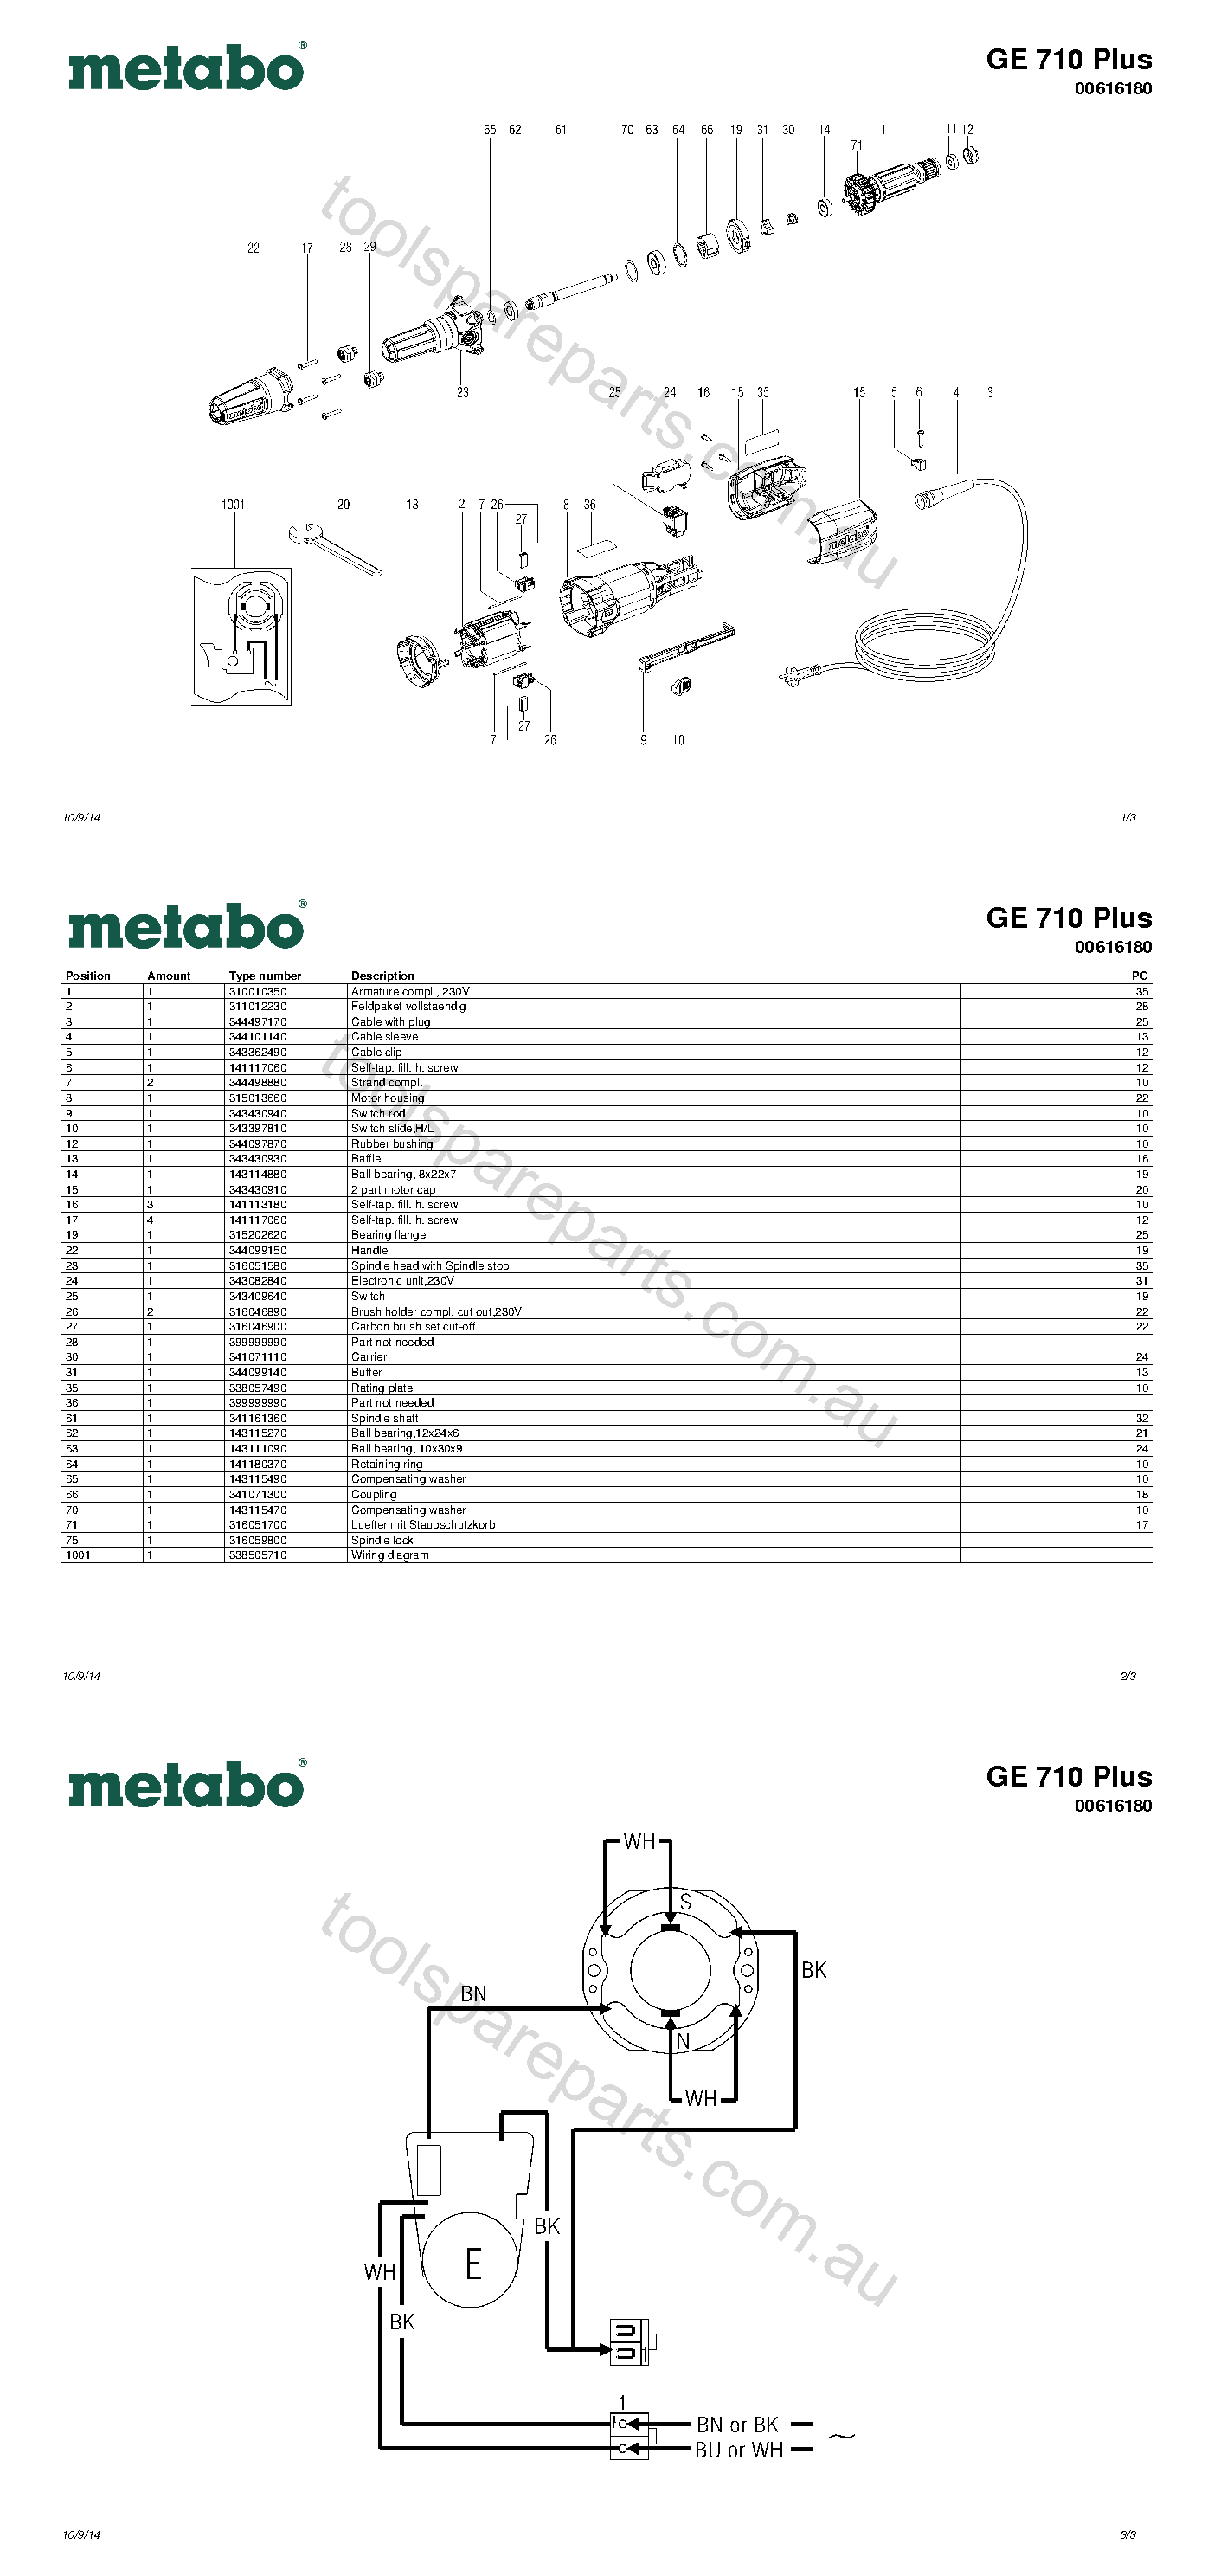 Metabo GE 710 Plus 00616180  Diagram 1